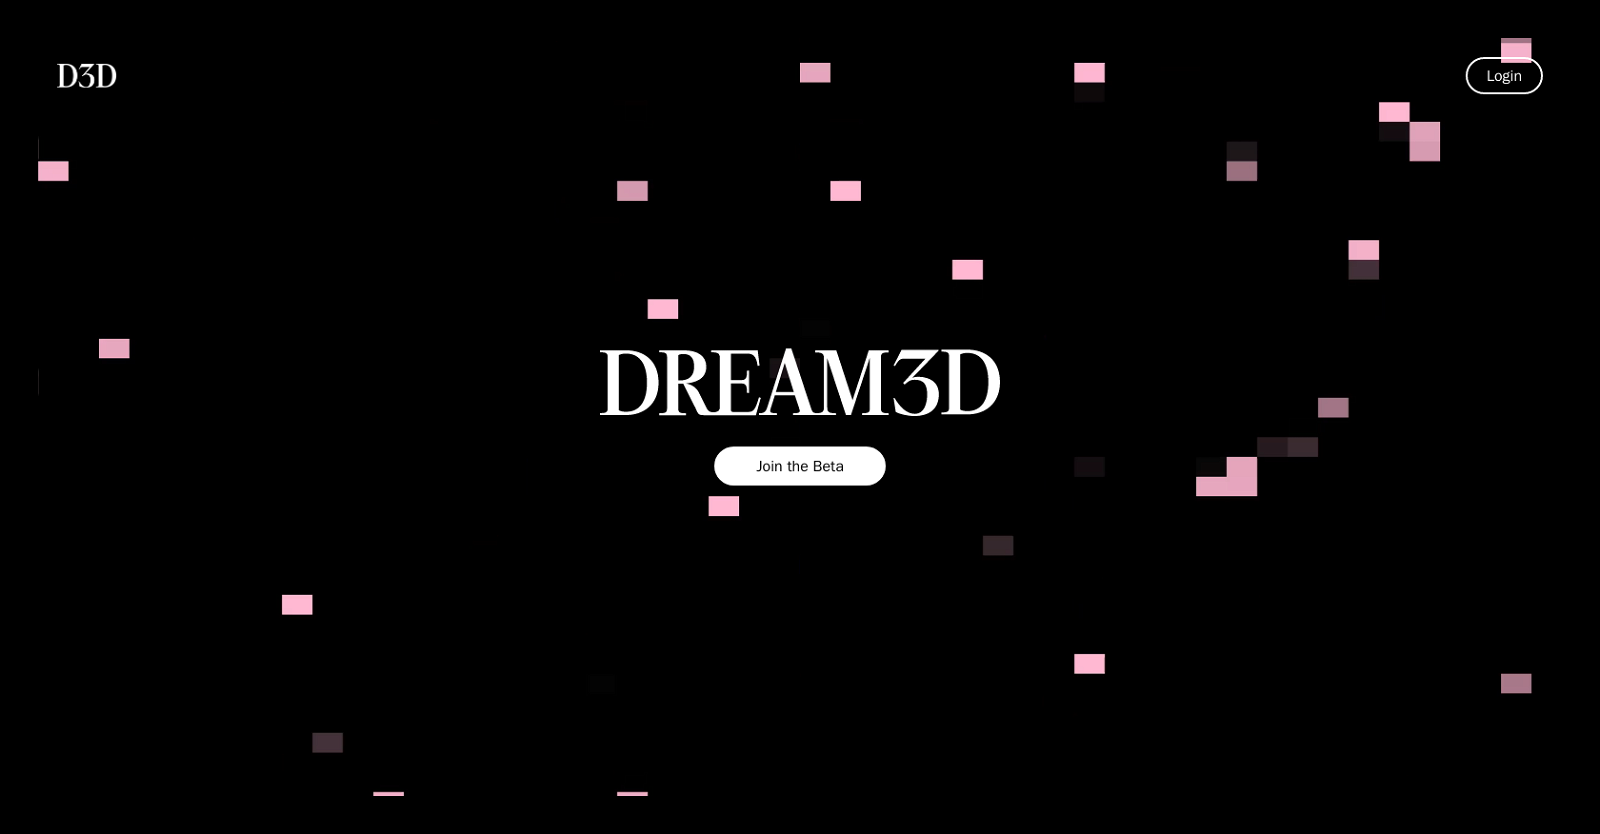 Dream3d